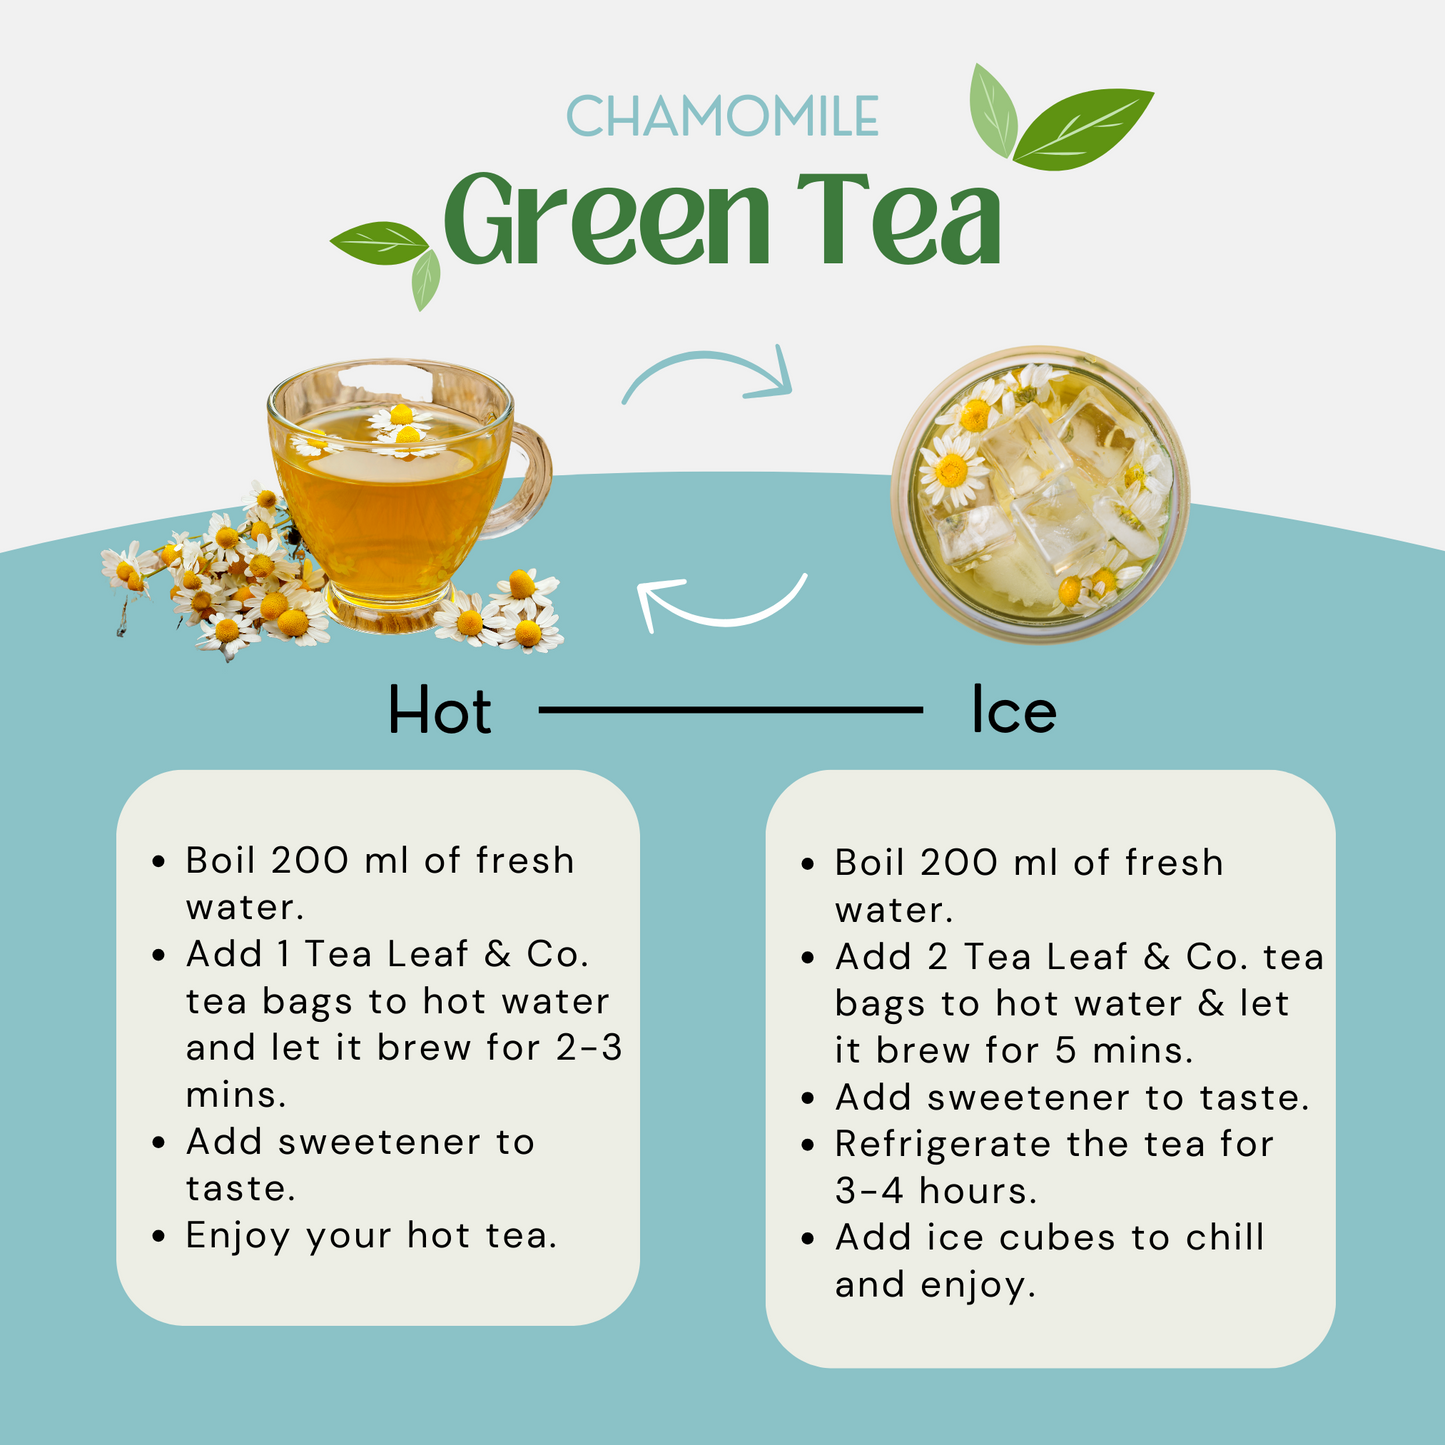 Chamomile Green Tea (Pack of 2) - 30 Pyramid Tea Bags